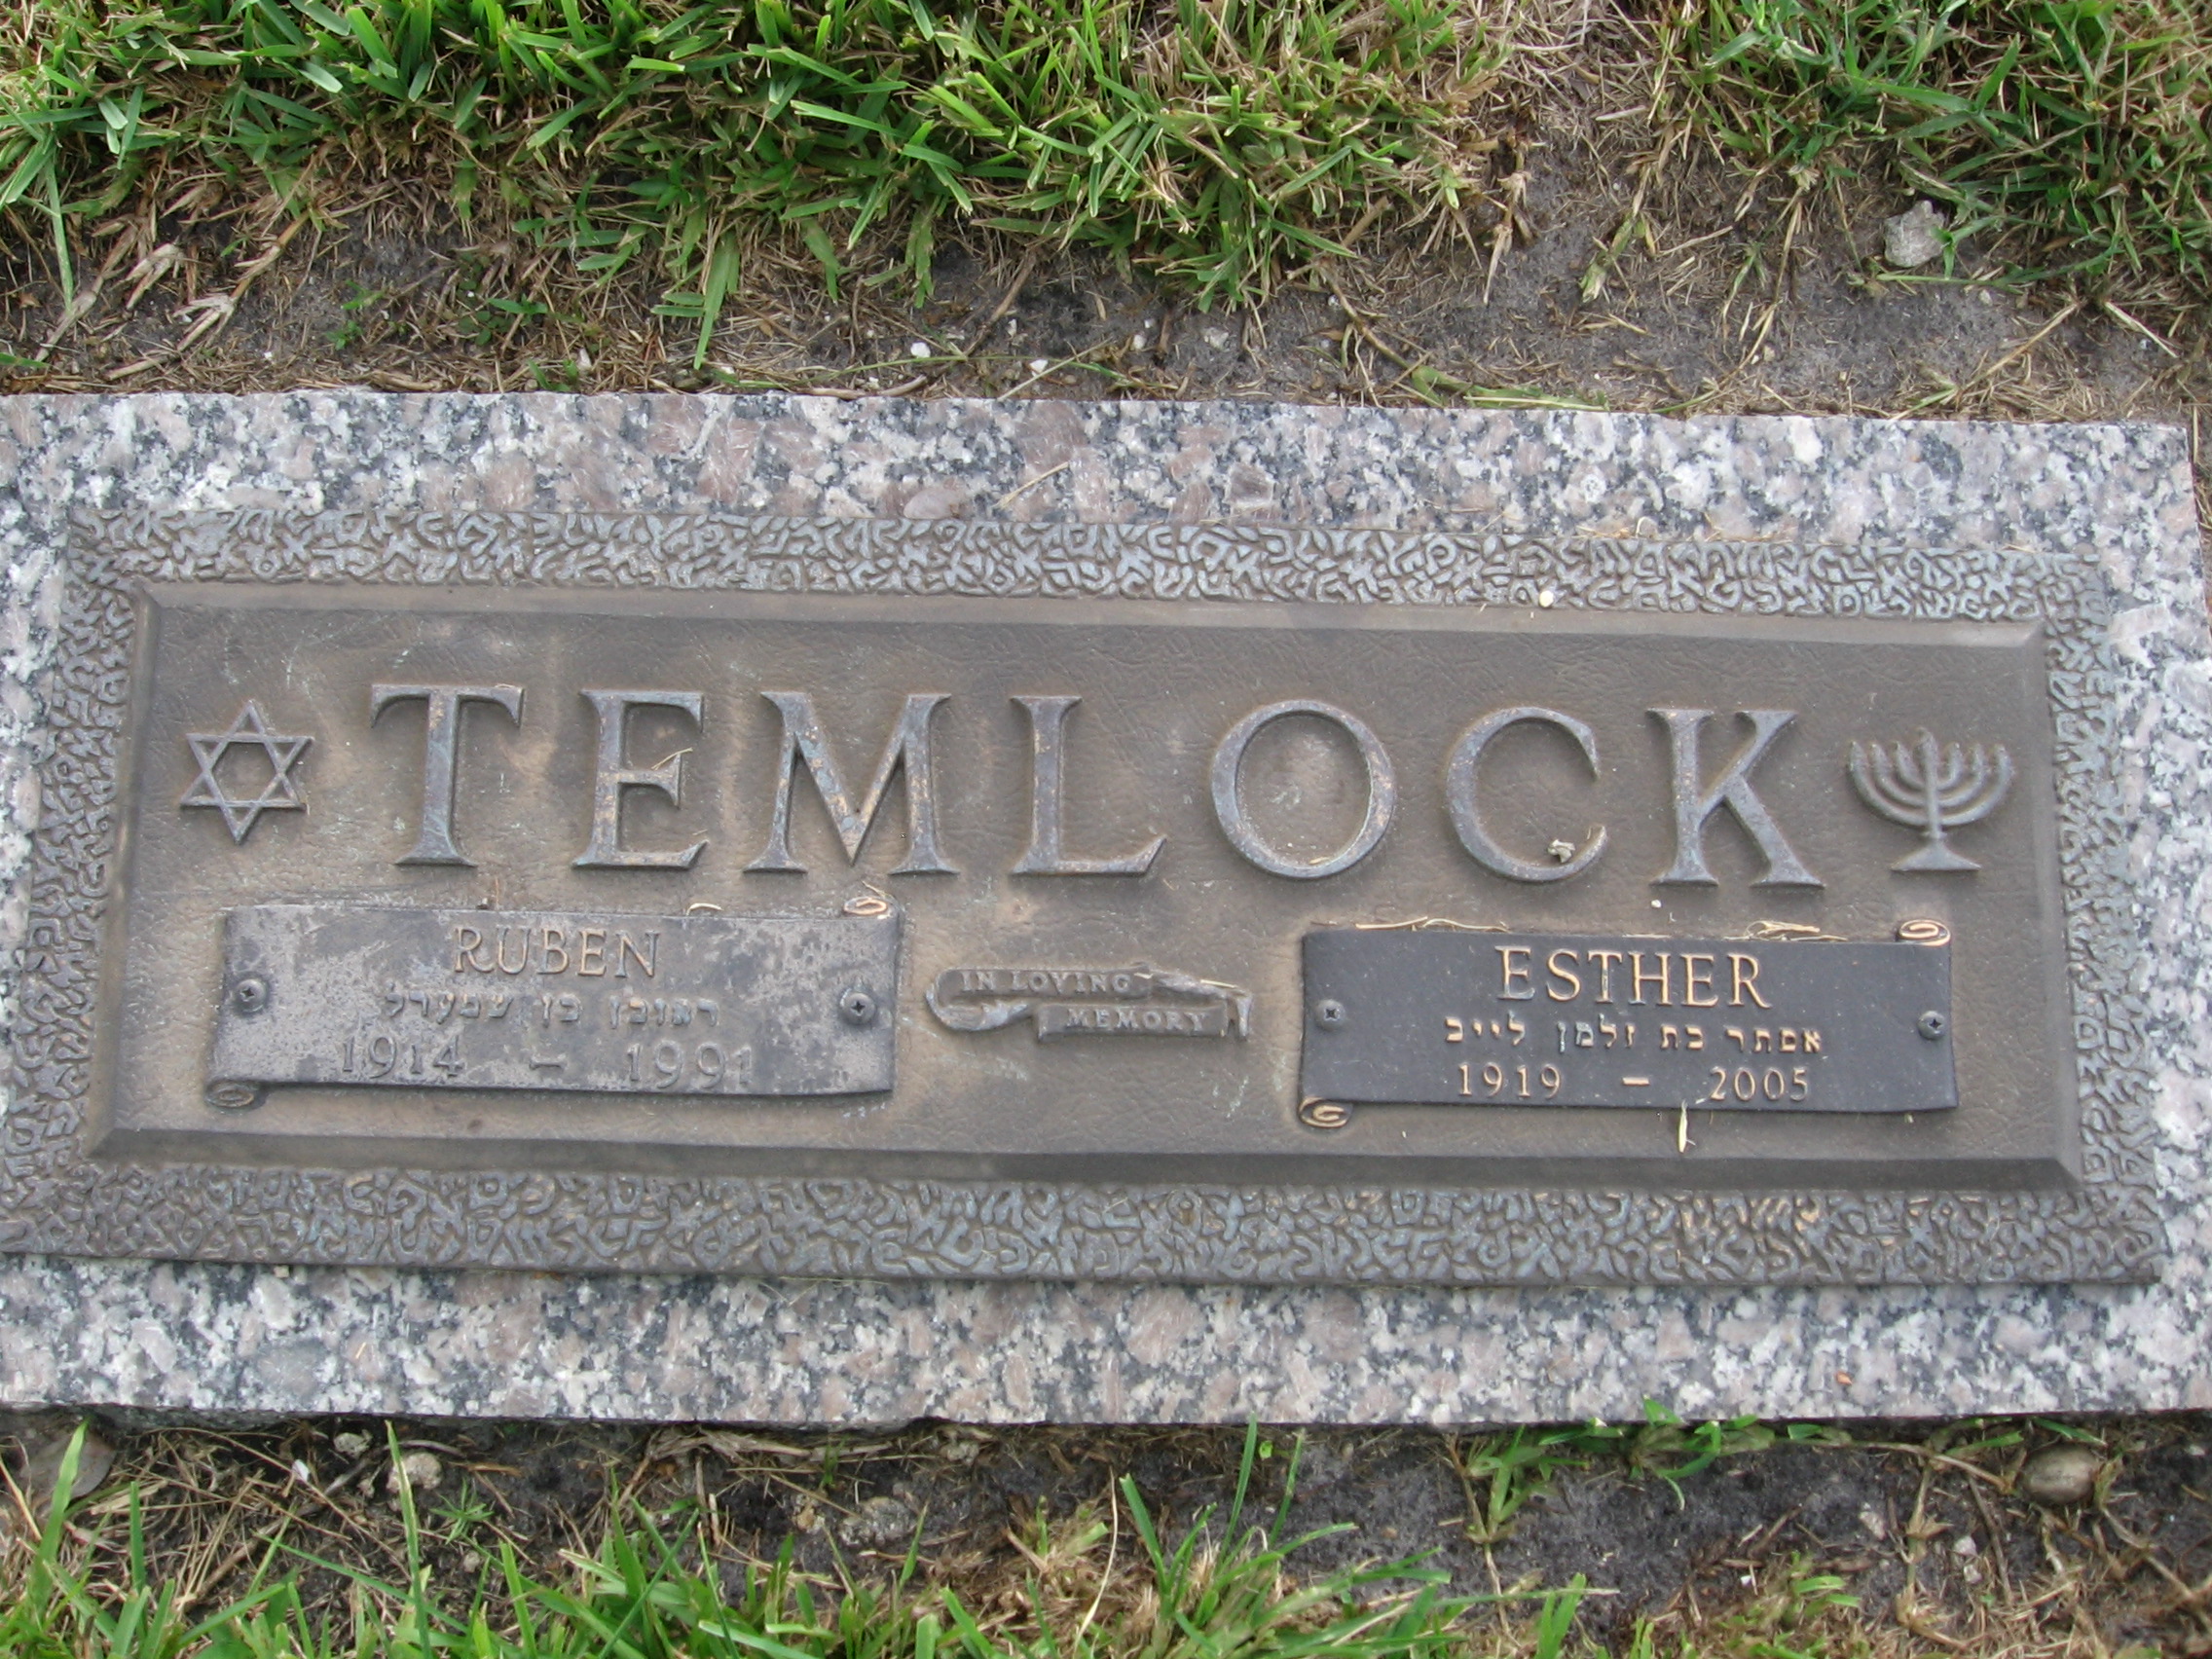 Esther Temlock